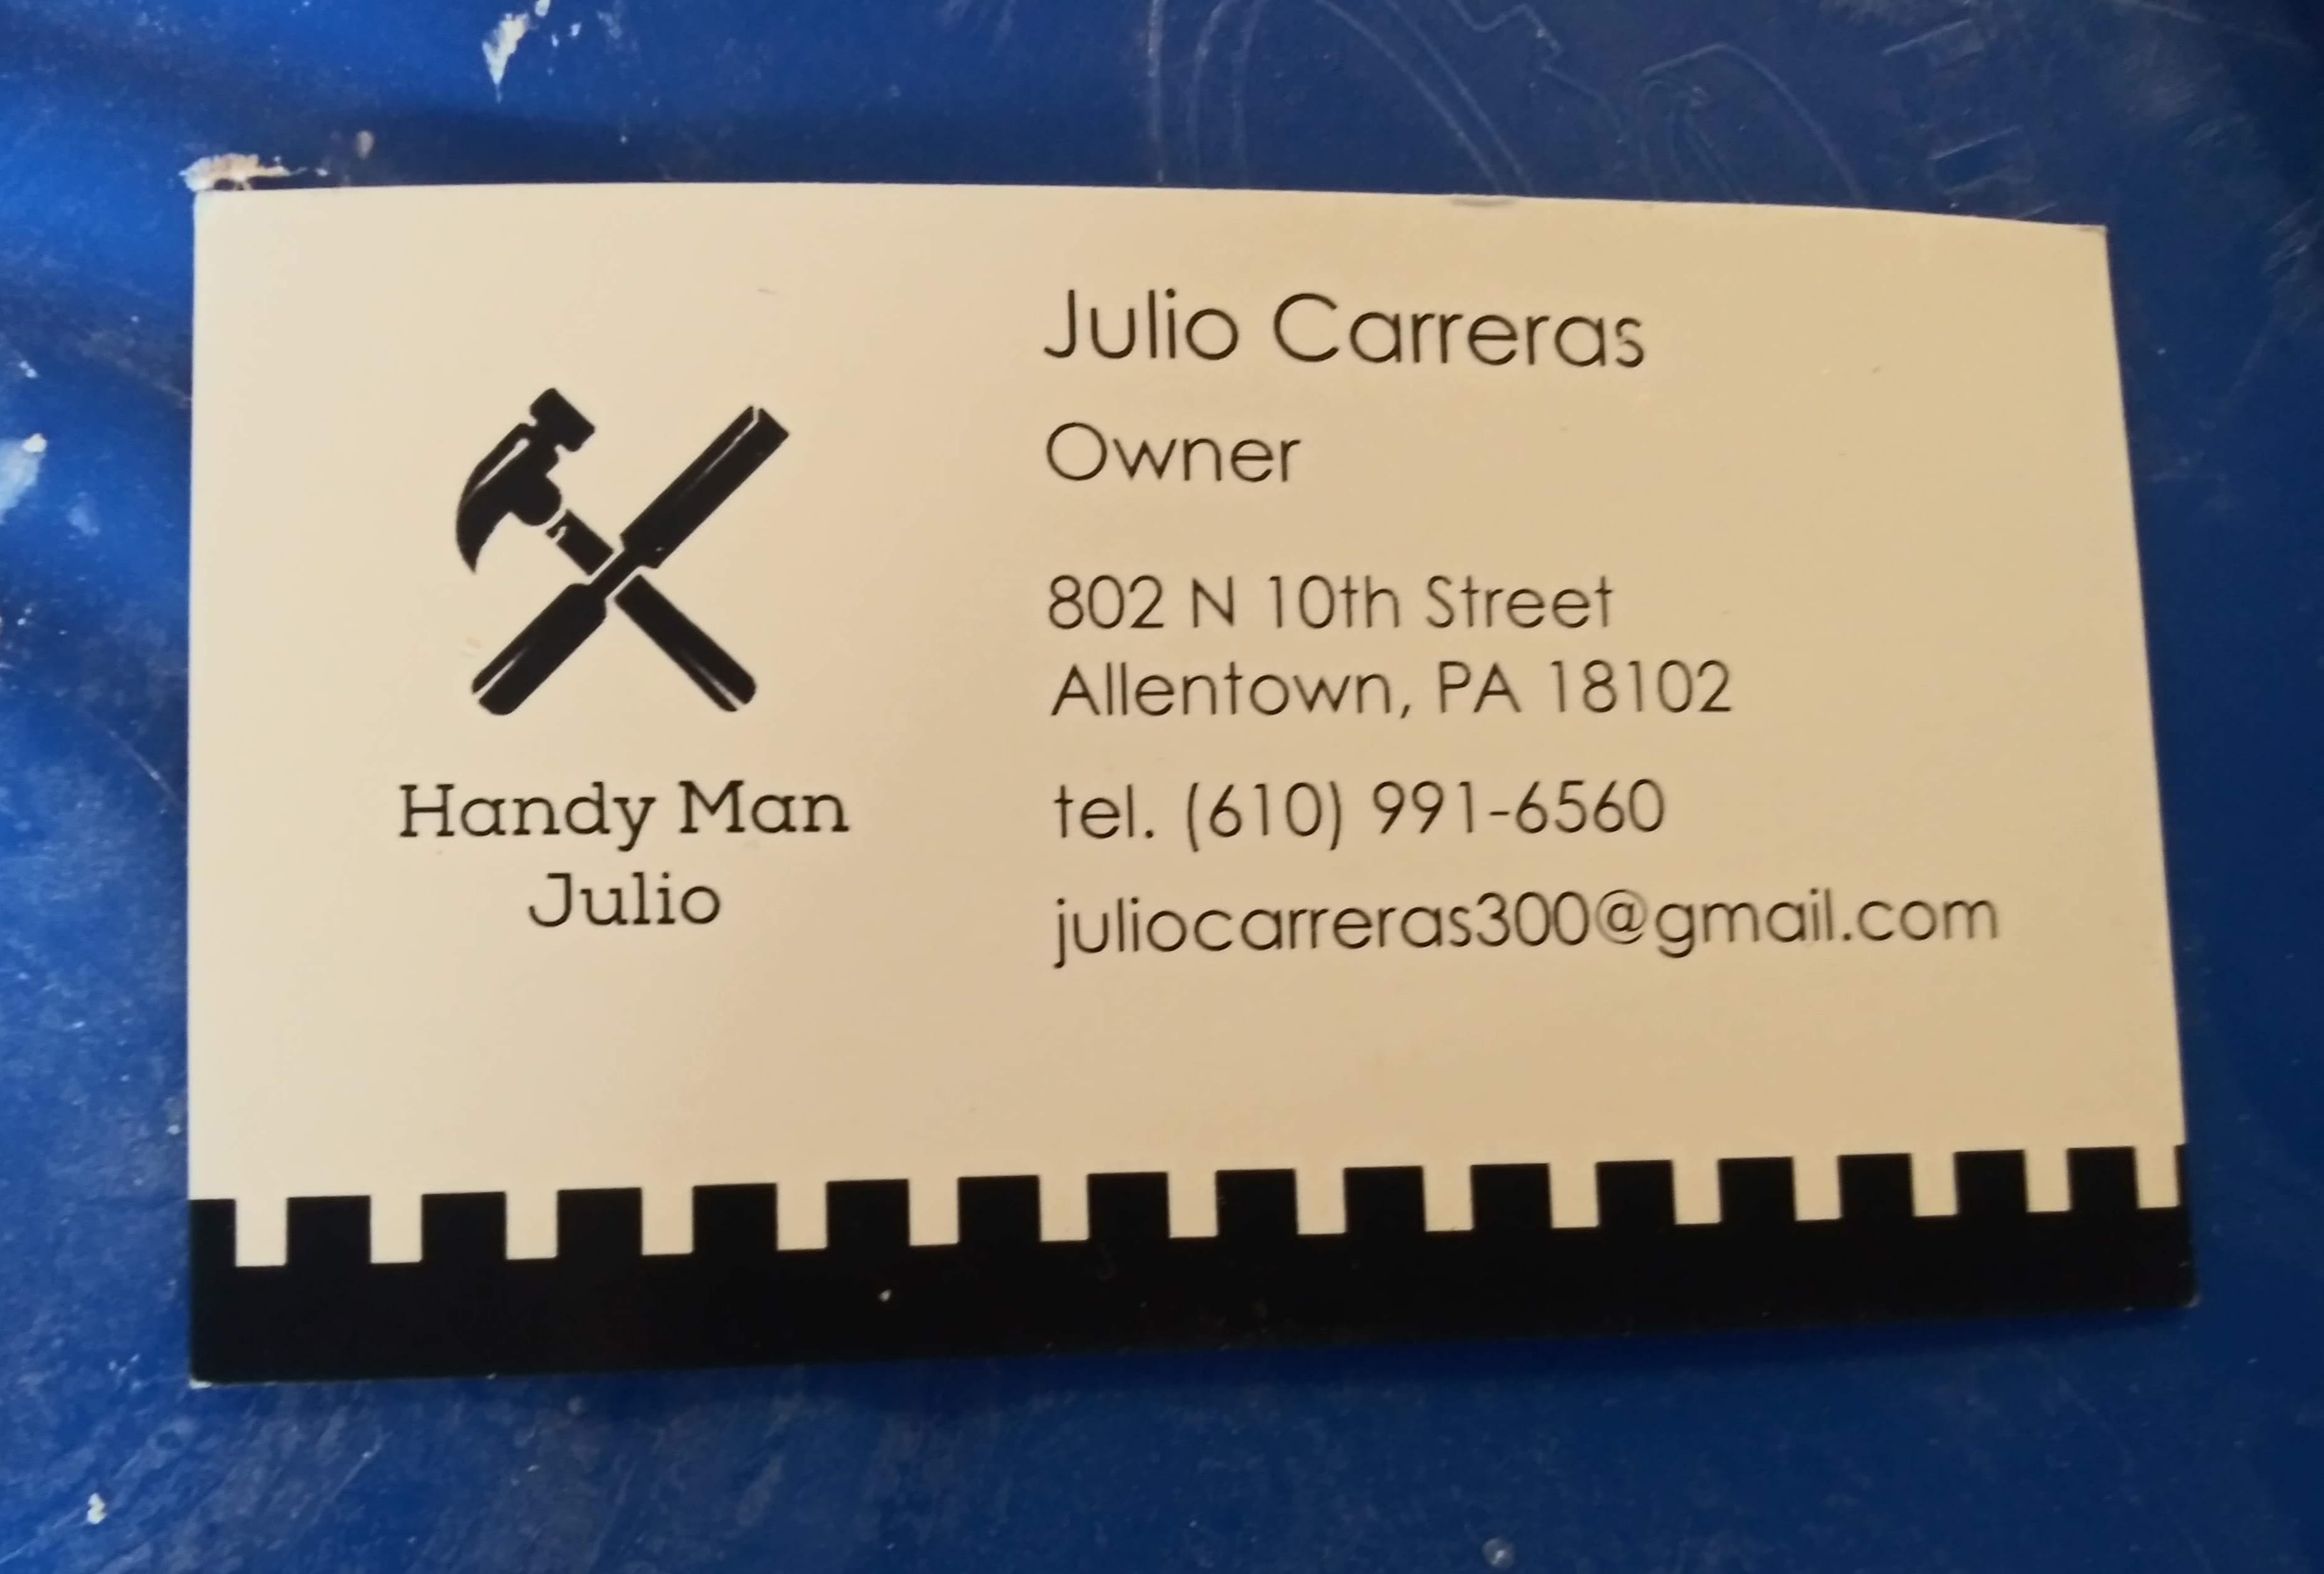 Handyman Julio